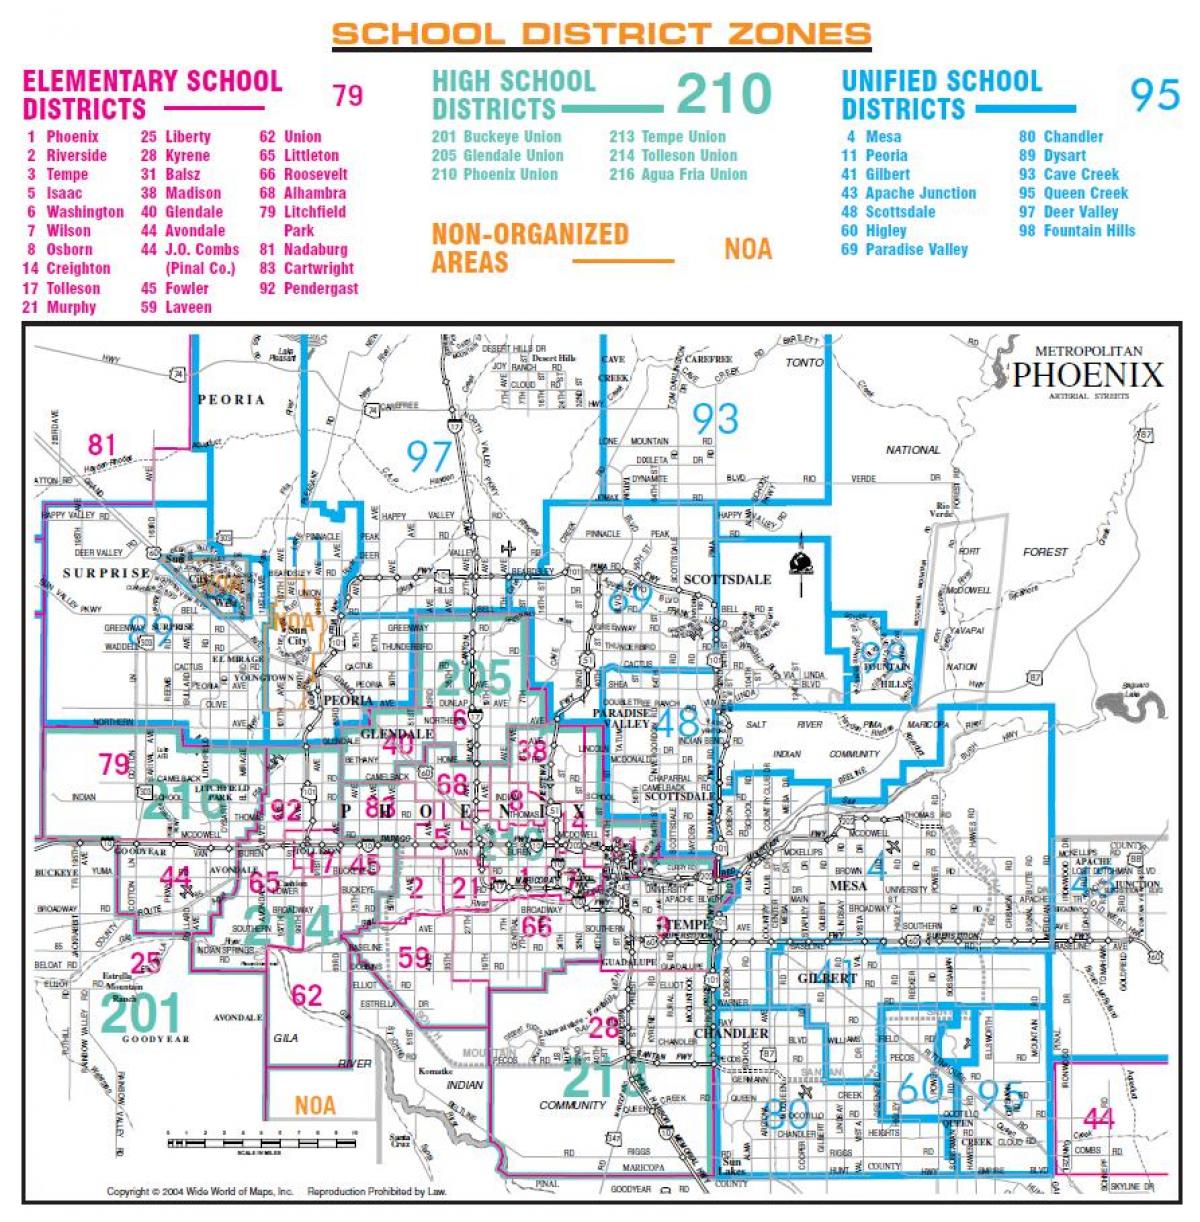 Phoenix unionen high school district karta